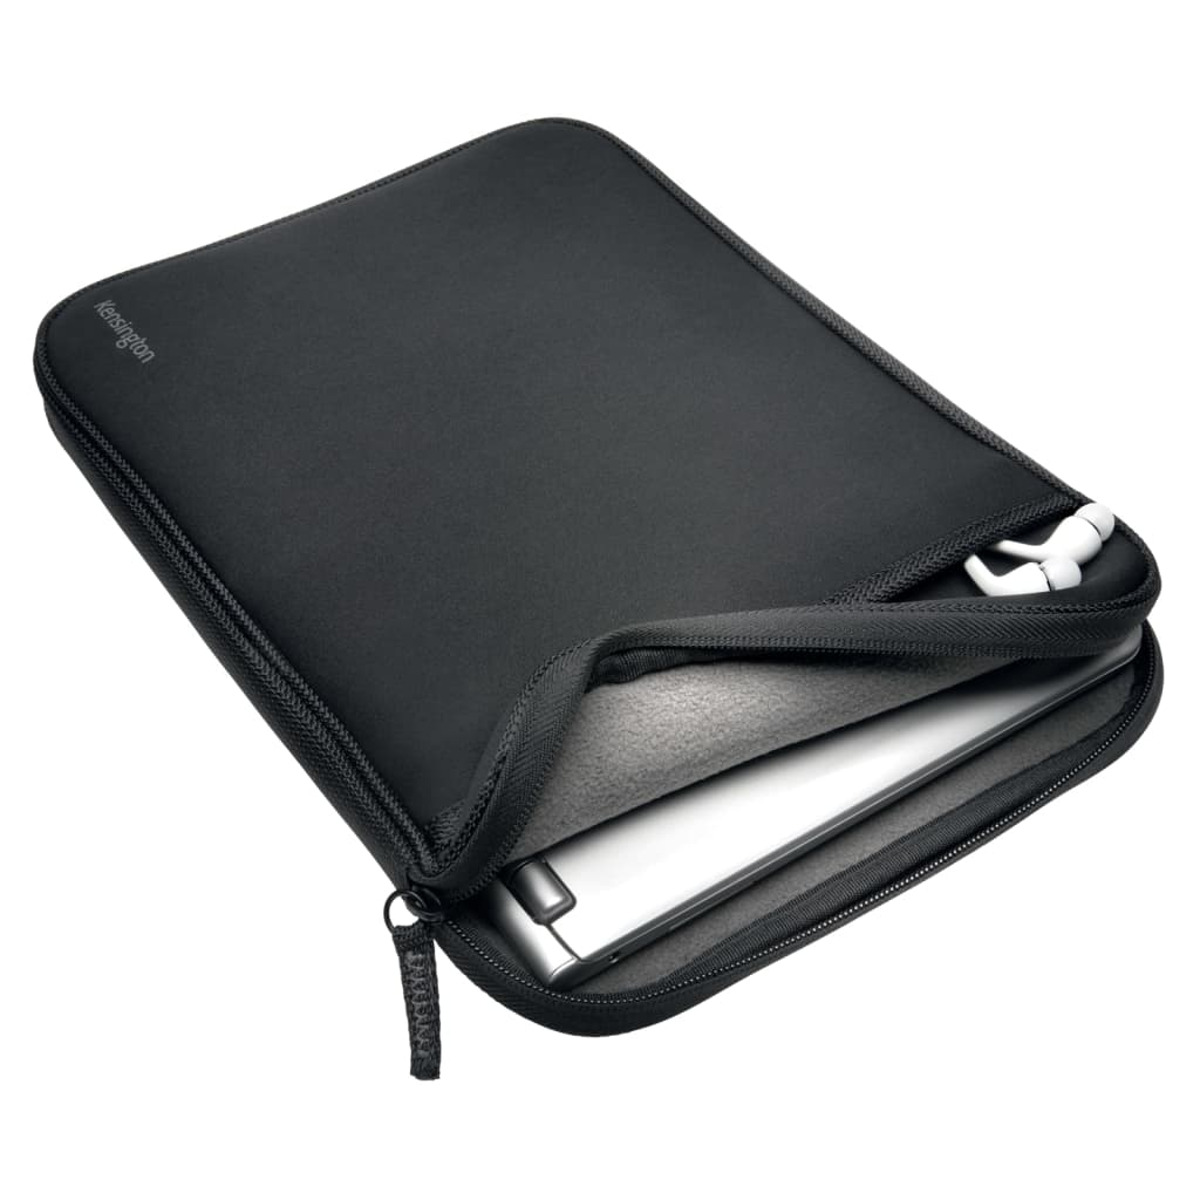 KENSINGTON 440549 Laptophülle für Neopren, Universal Sleeve Black